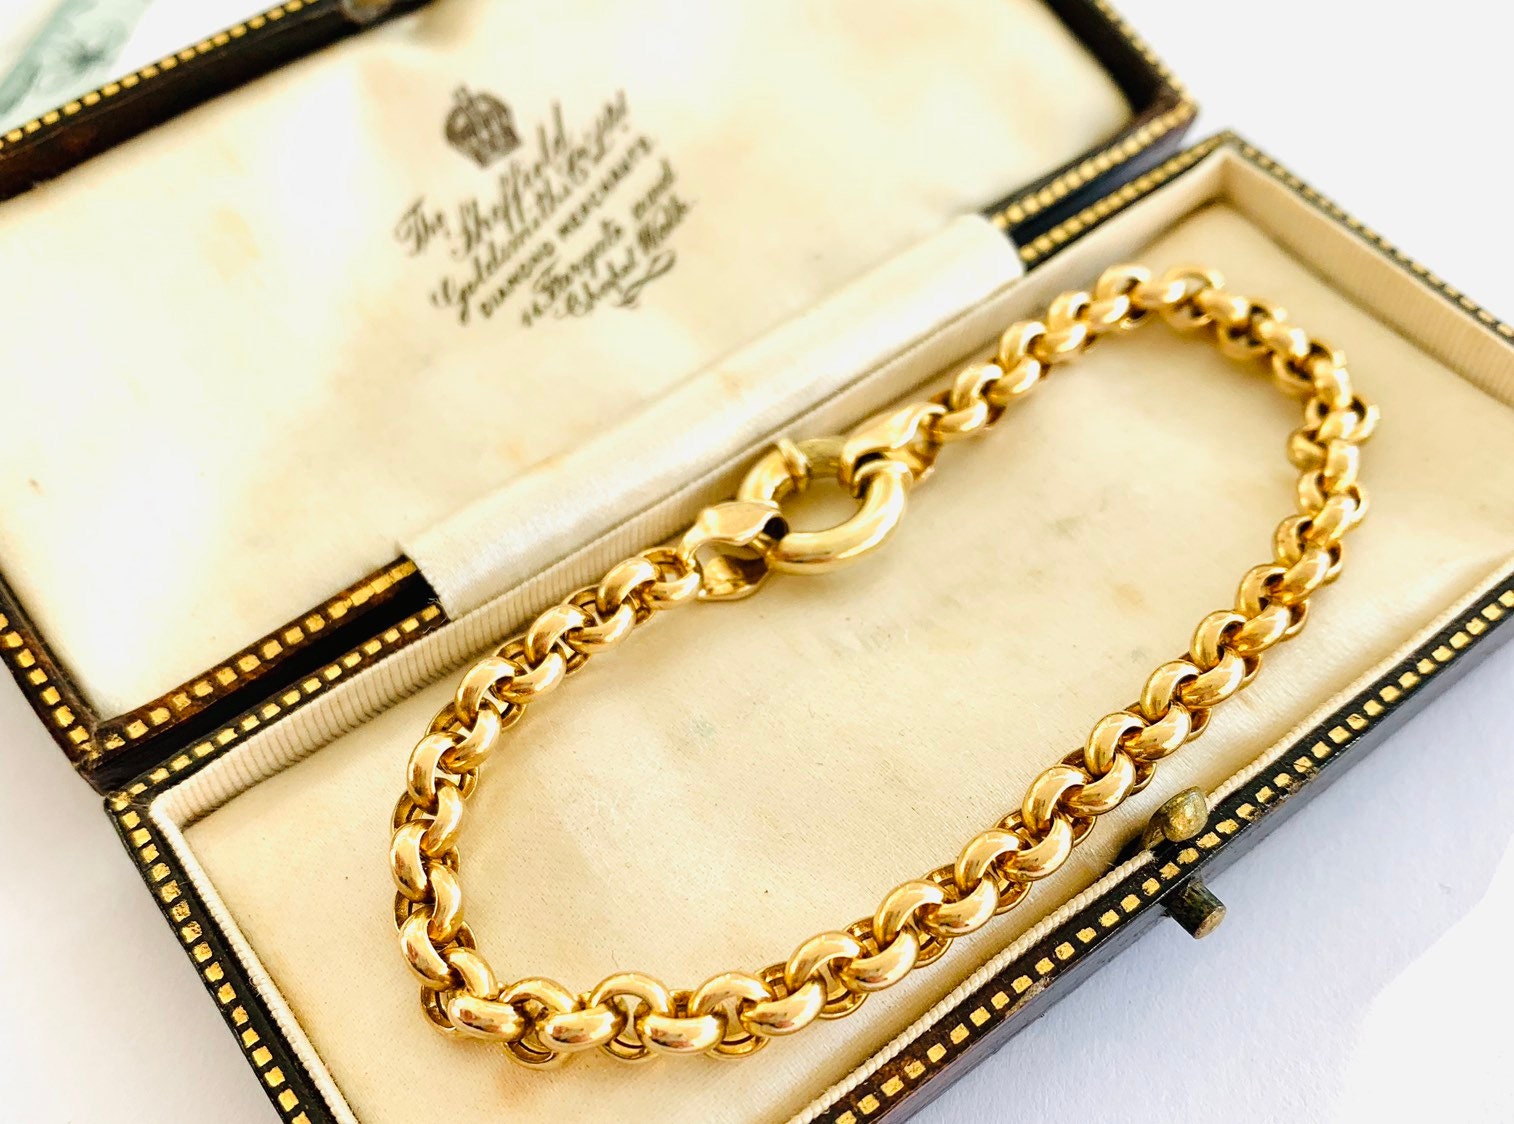 Superb vintage 9ct yellow gold belcher bracelet with bolt ring - fully ...